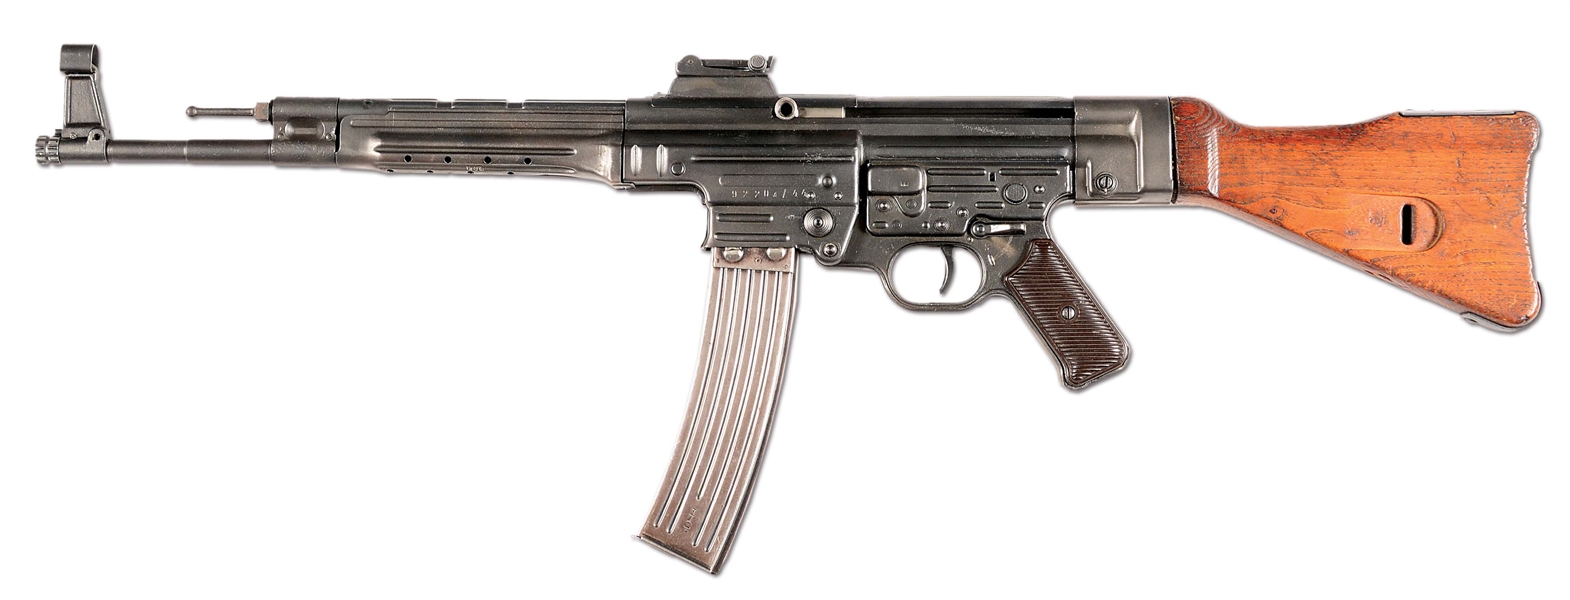 (N) DESIRABLE ERB REGISTERED WORLD WAR II GERMAN MP-43 MACHINE GUN (FULLY TRANSFERABLE).